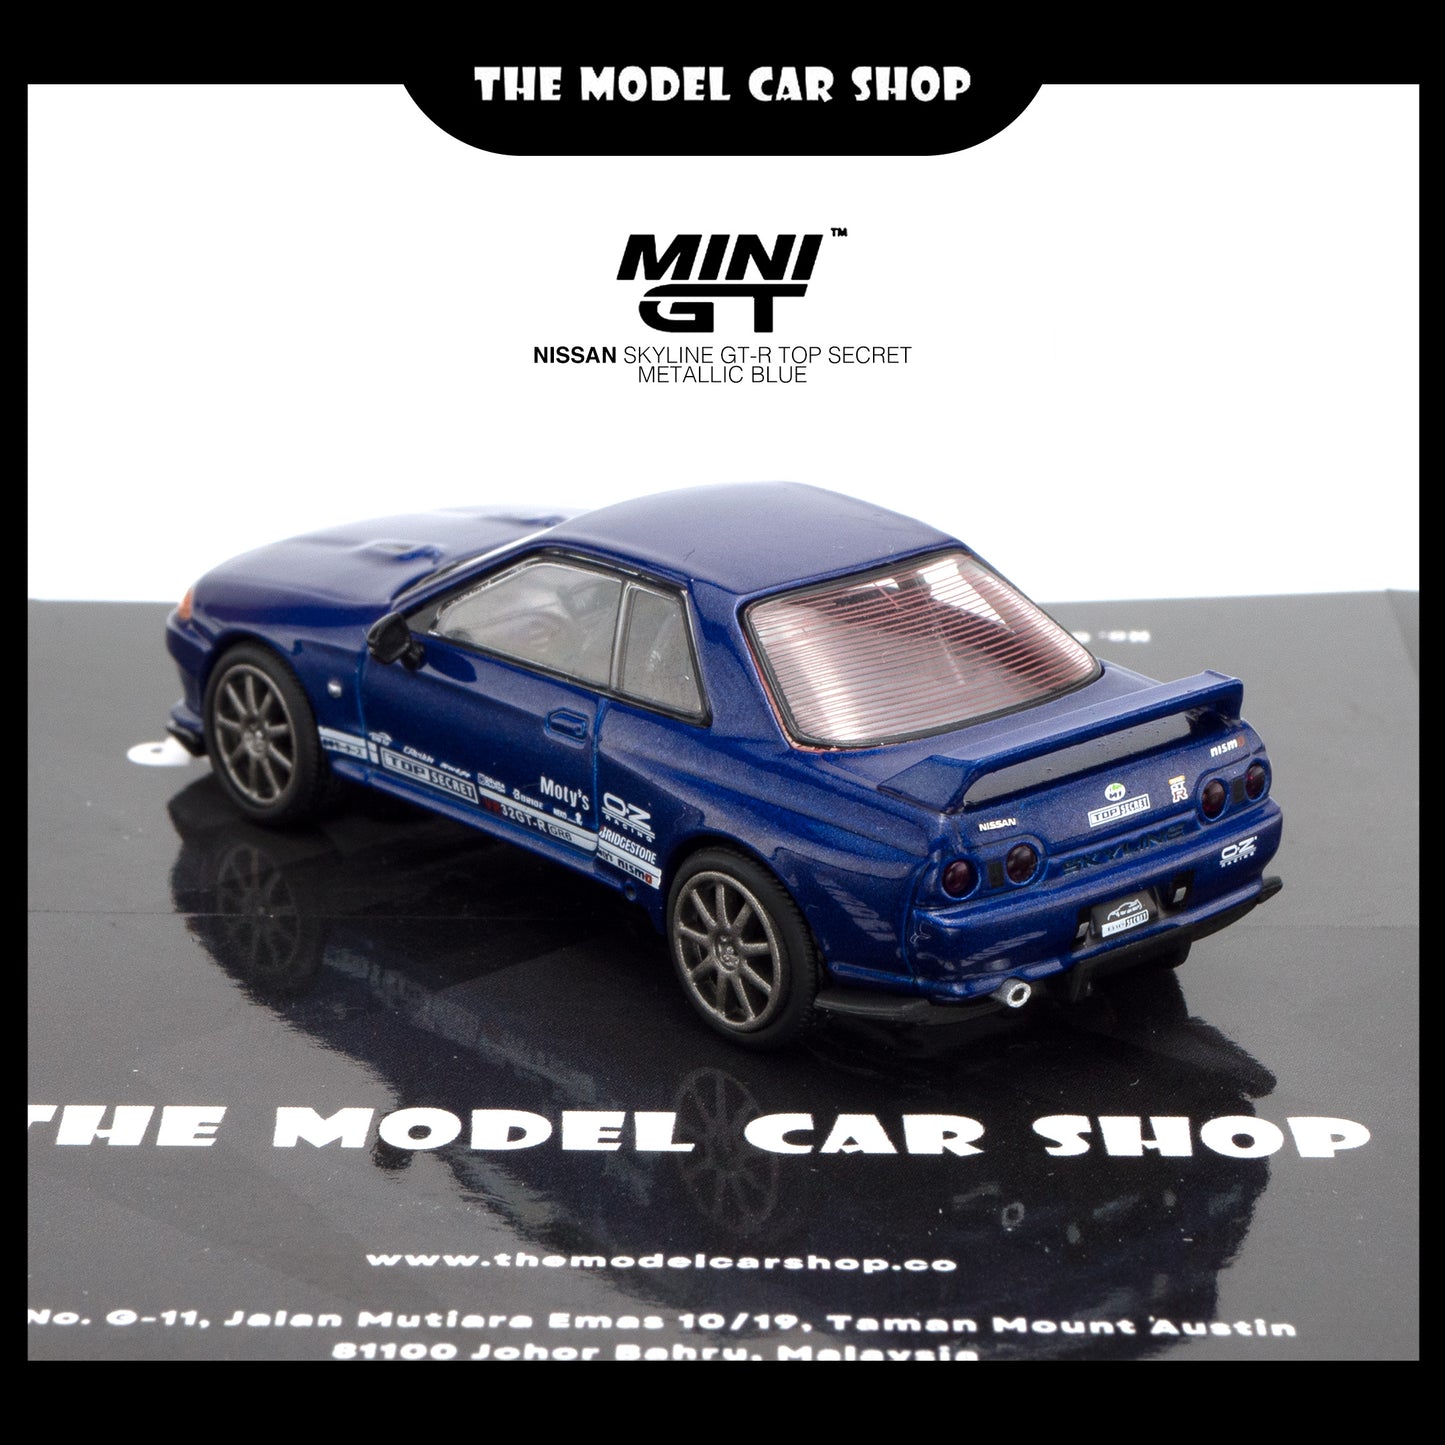 [MINI GT] Nissan Skyline GT-R Top Secret VR32 - Metallic Blue